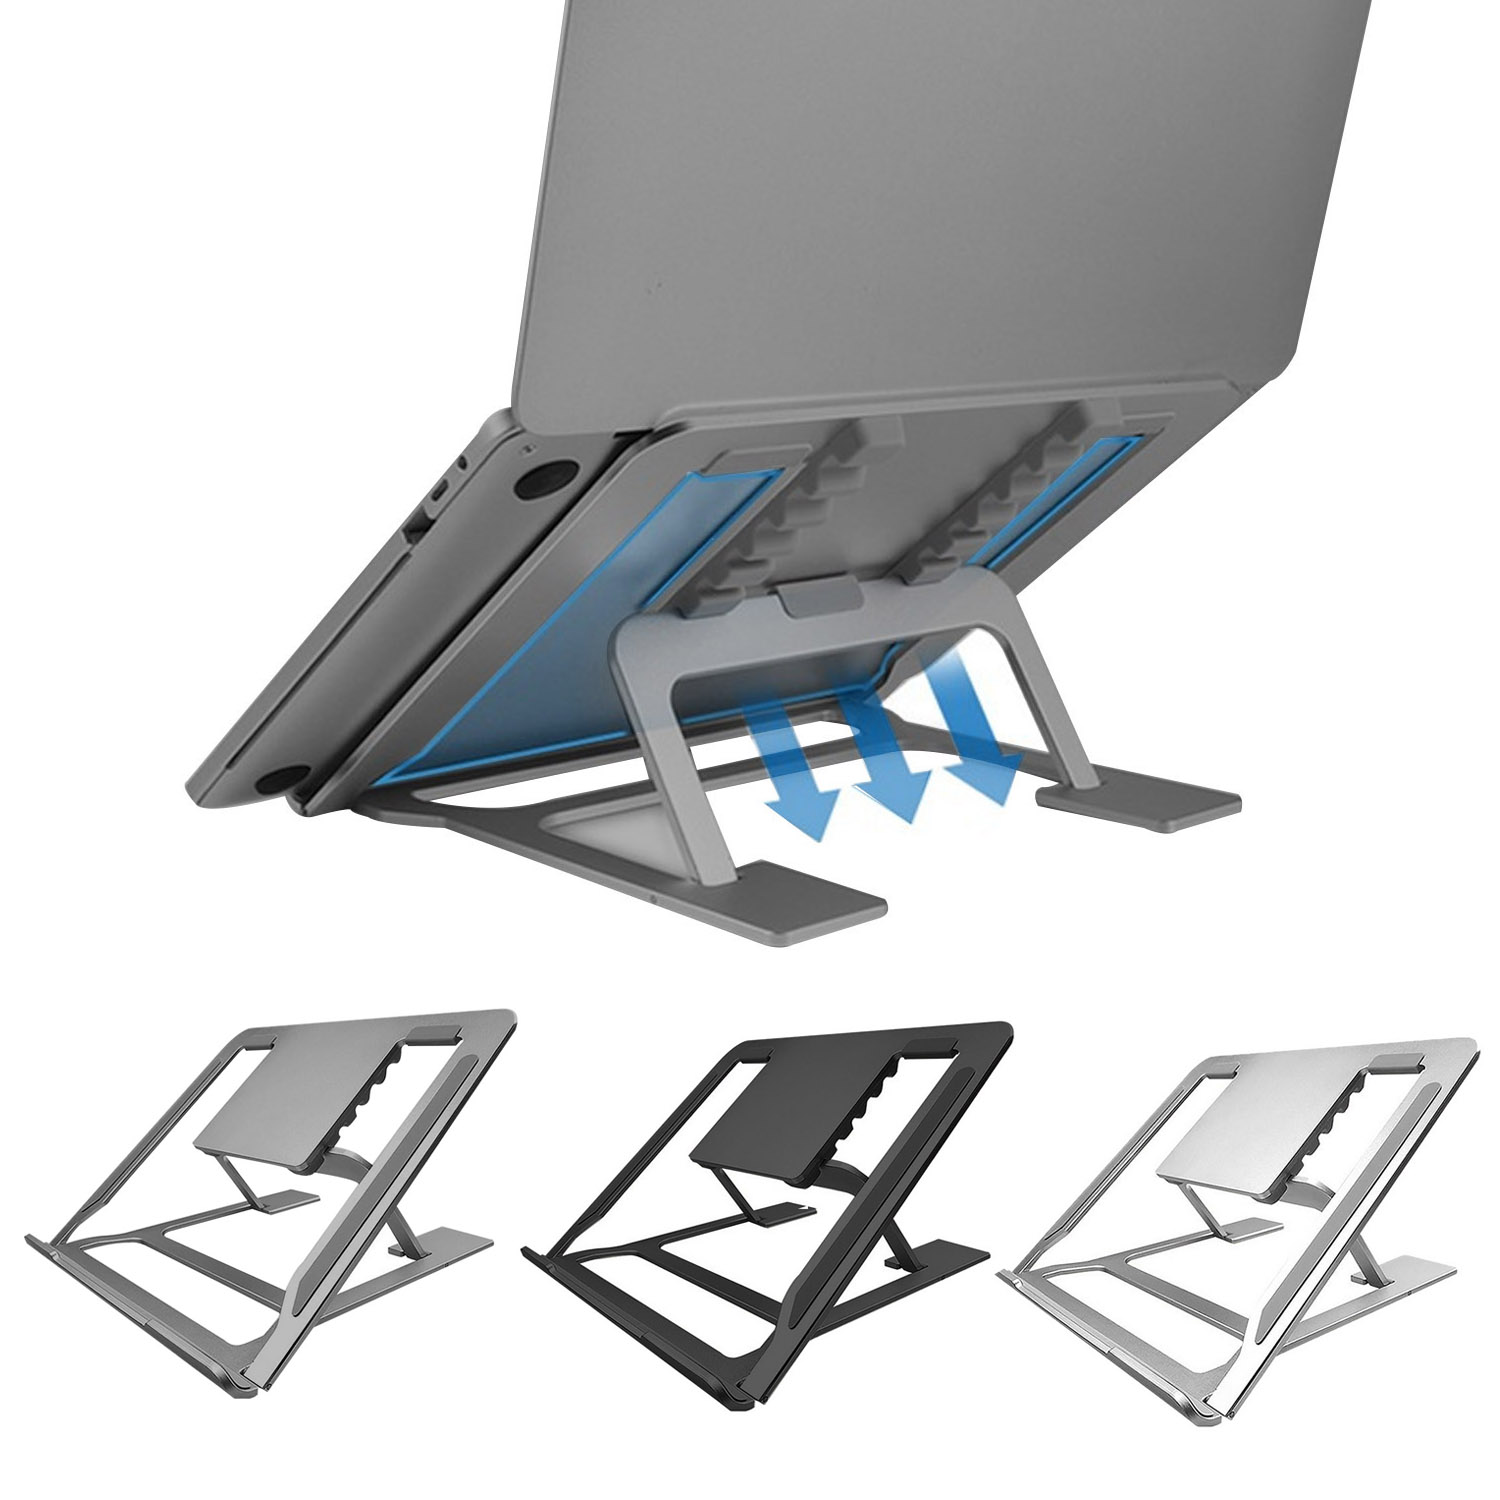 Besegad Folding Aluminum Notebook Laptop Anti-slip Cooling Pad Stand Holder for Apple MacBook Mac Book Lenovo Samsung Computer